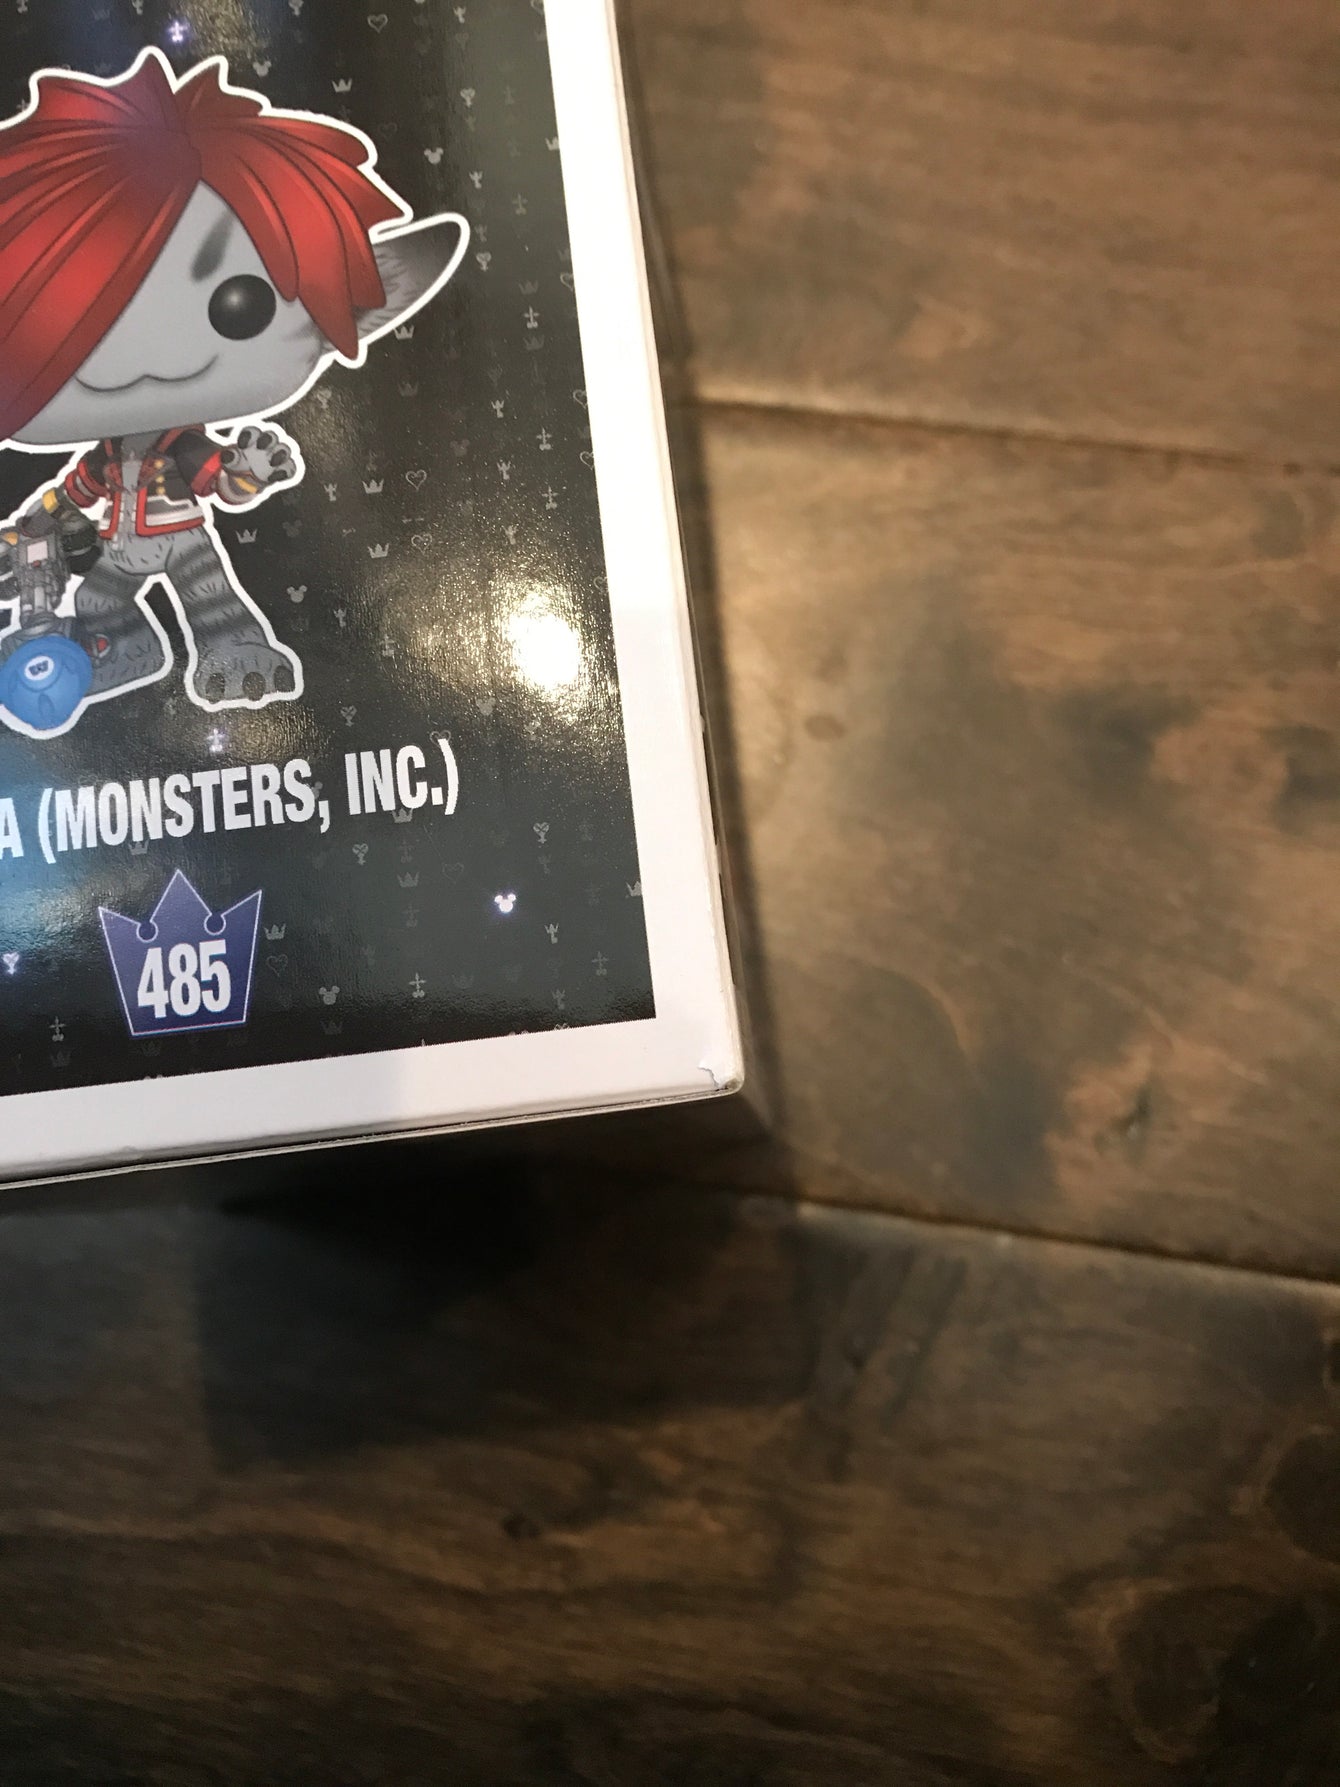 Sora (Monsters, INC.) not mint LC4